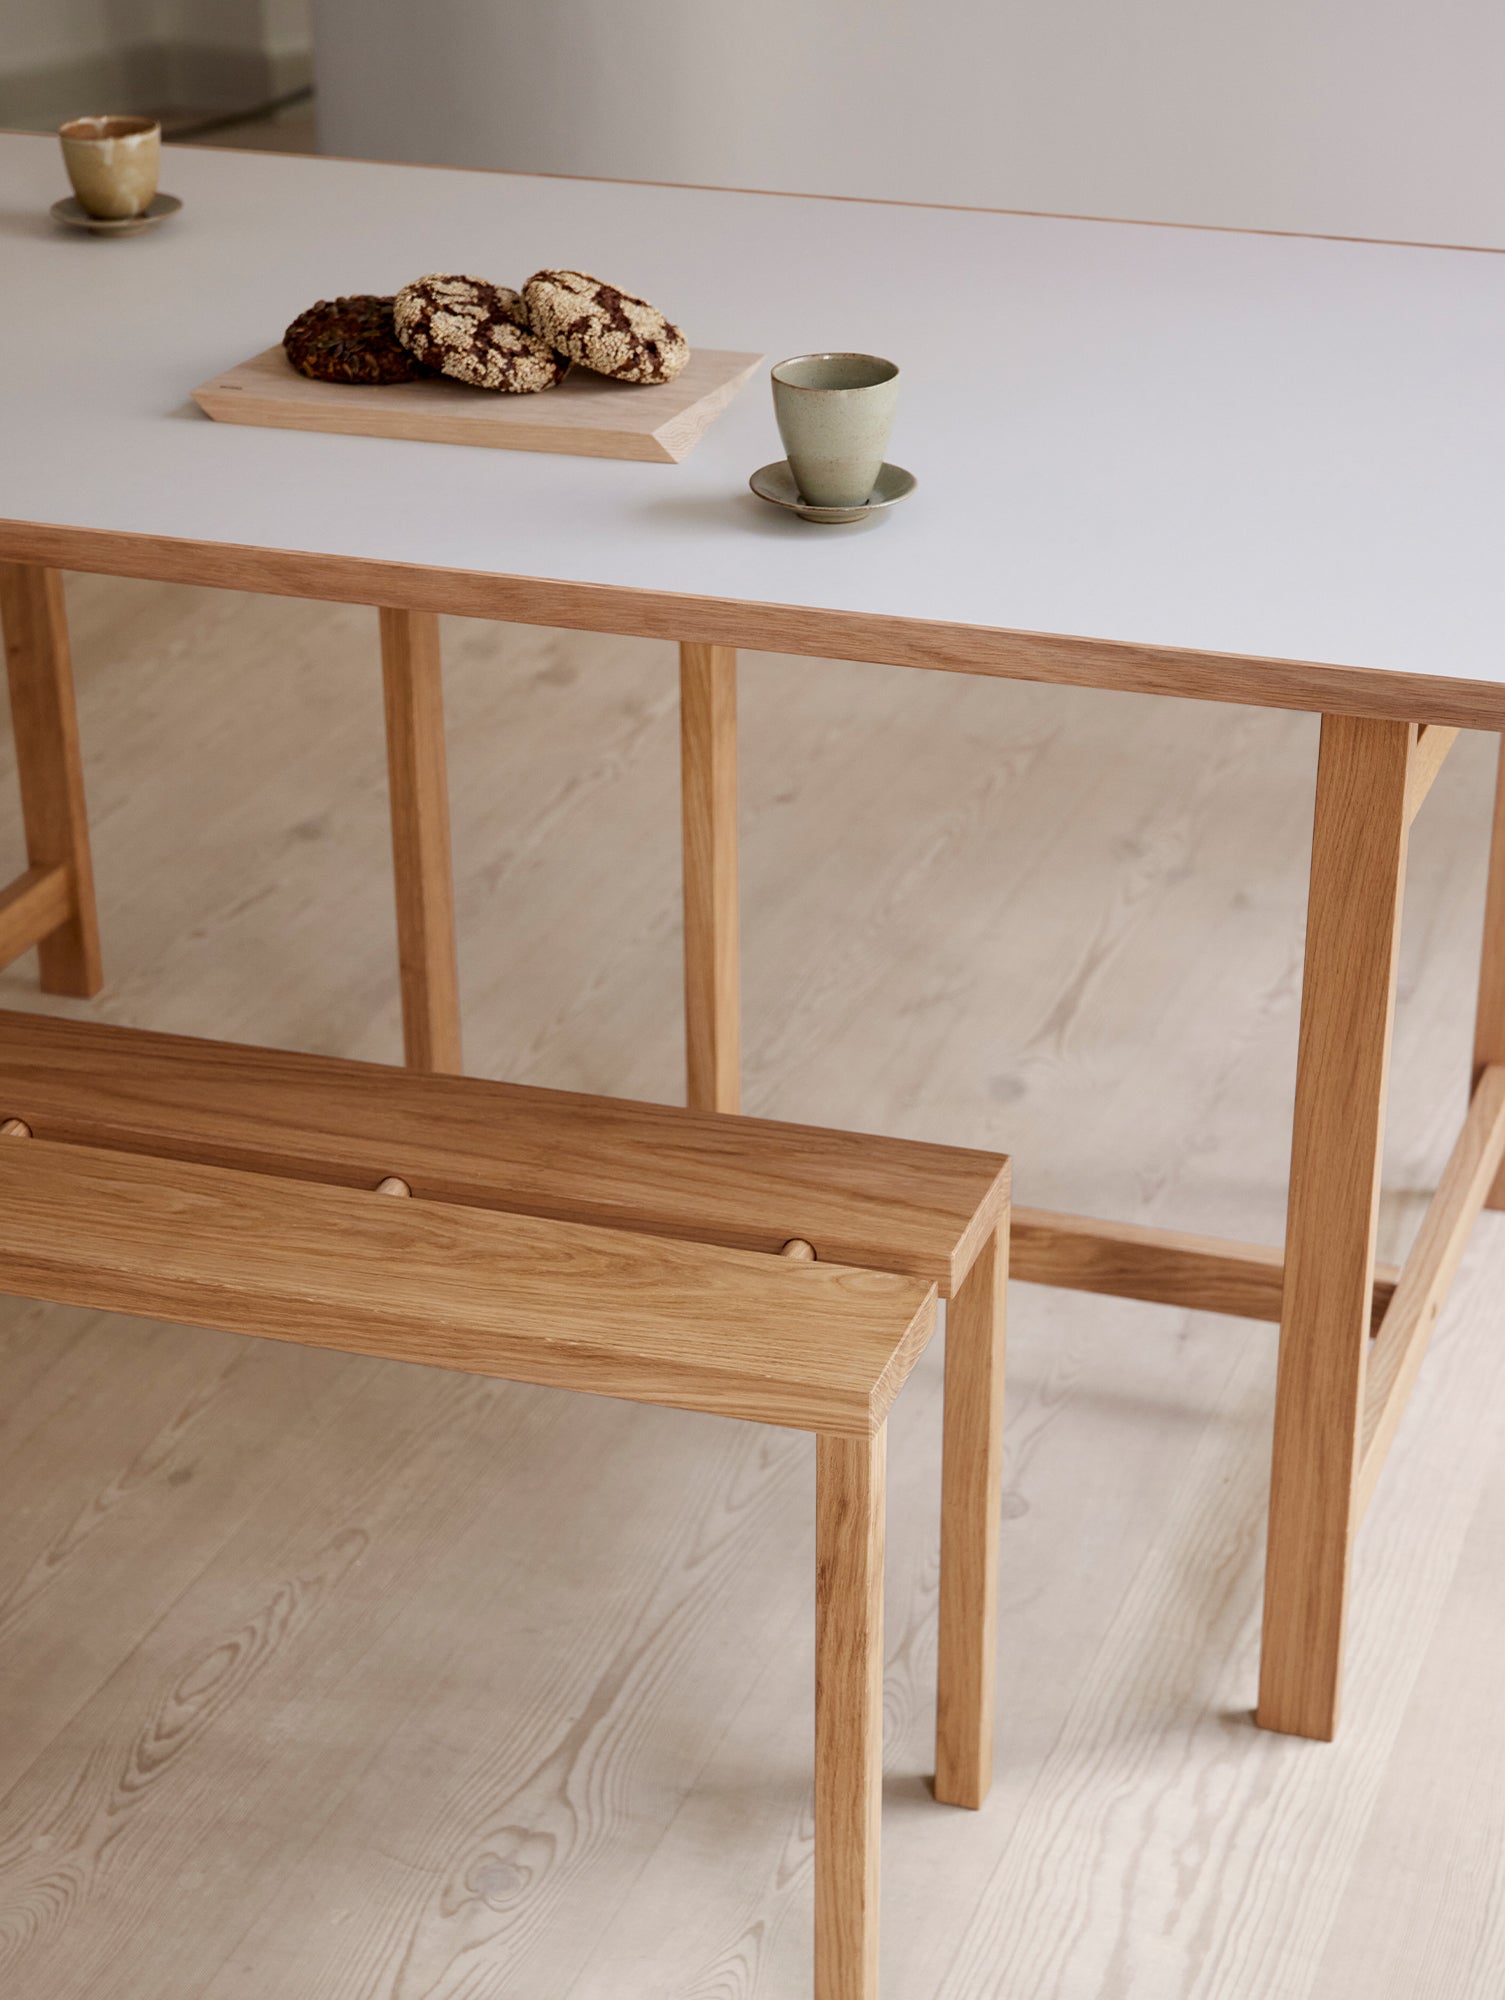 Rectangular Dining Table (Linoleum Tabletop) by Moebe - Length: 160 cm / Warm Beige